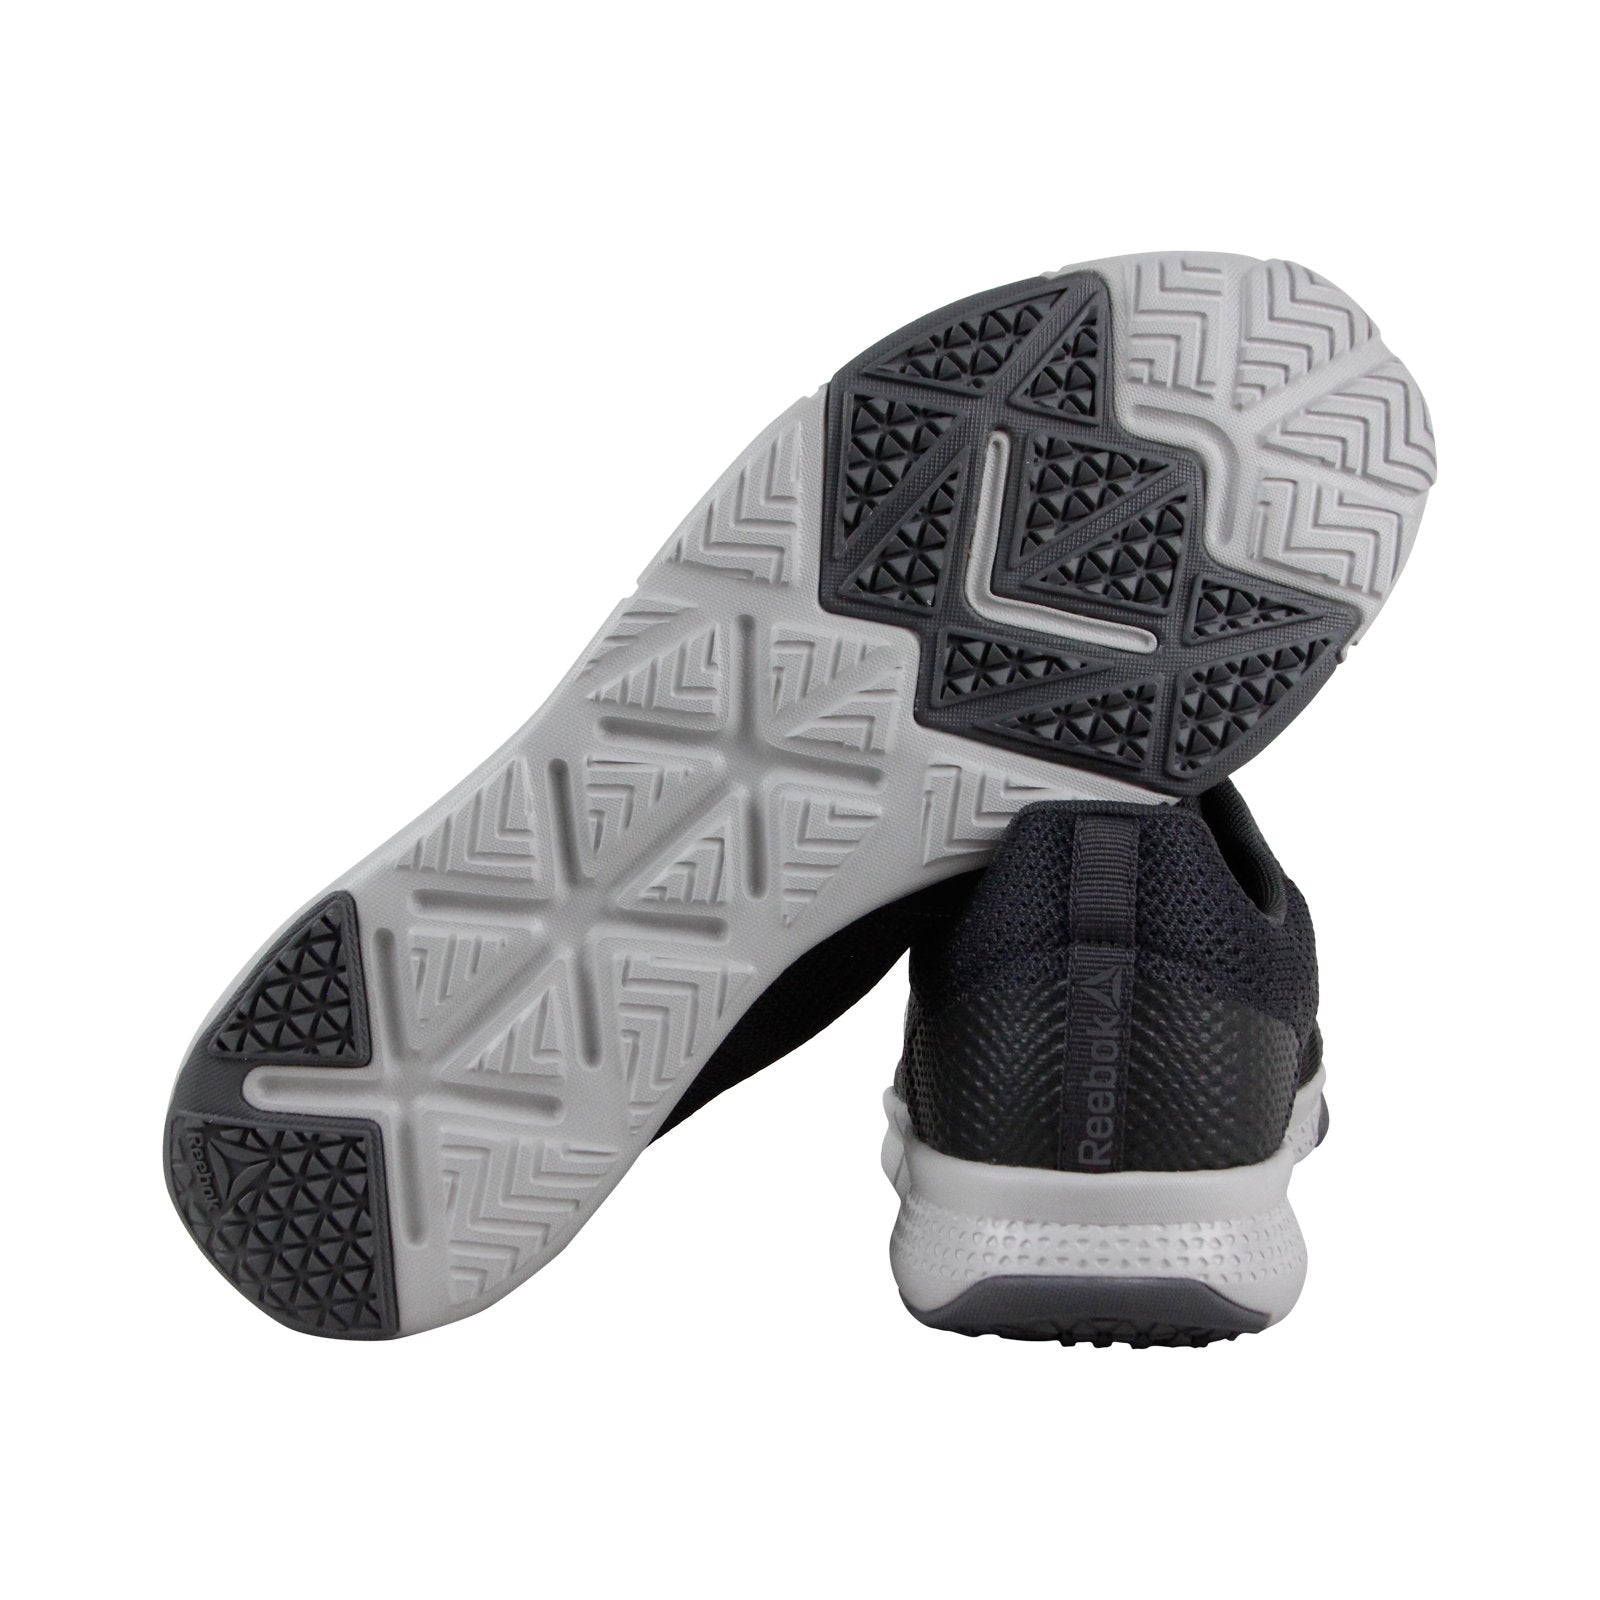 Reebok Flexile CN1024 Black Athletic Cross Training - Ruze Shoes